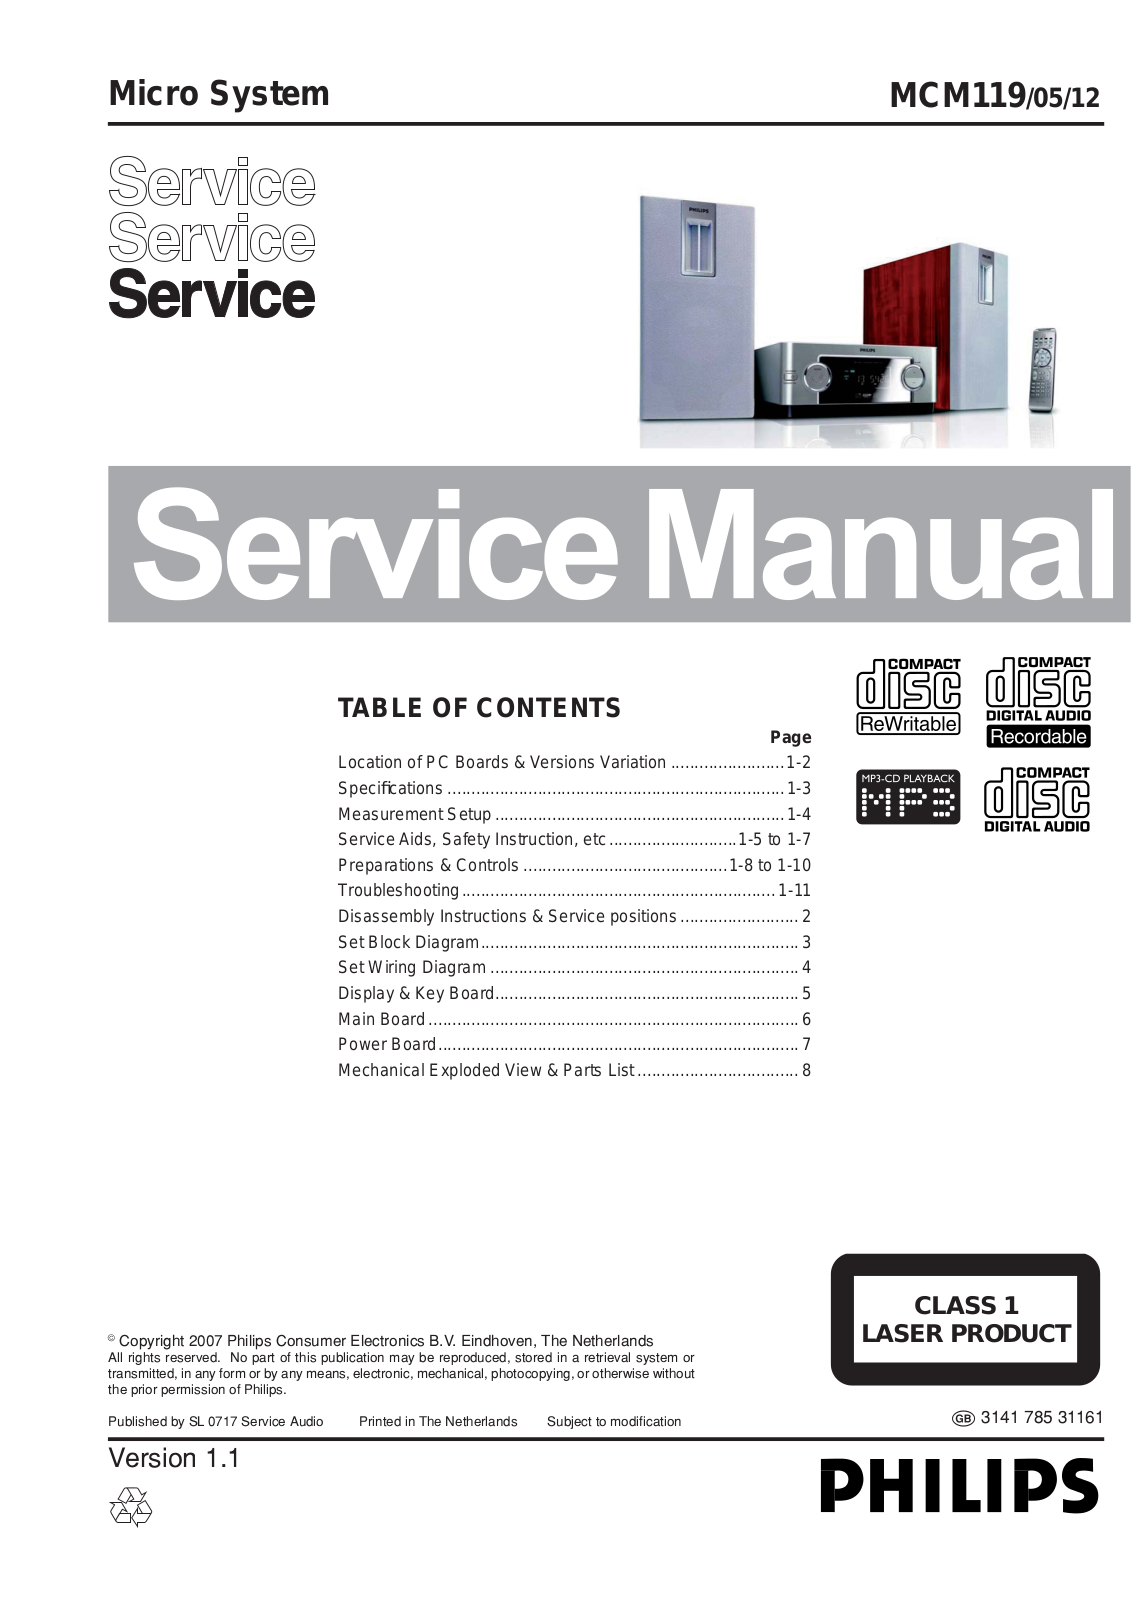 Philips MCM-119 Service Manual